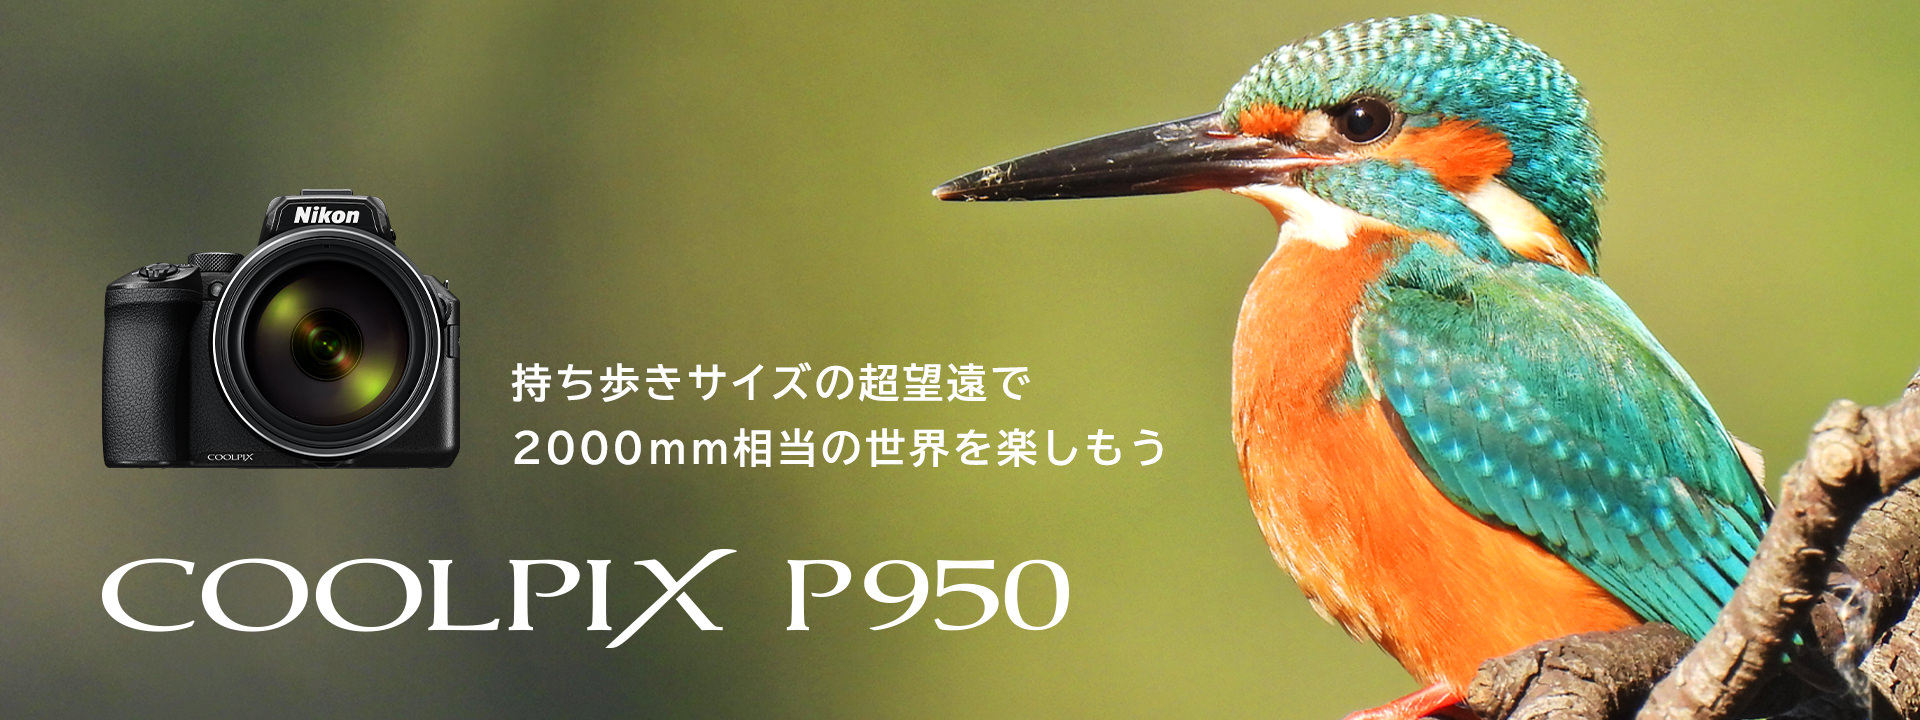 Nikon coolpix p950 ニコンクールピクスp950-